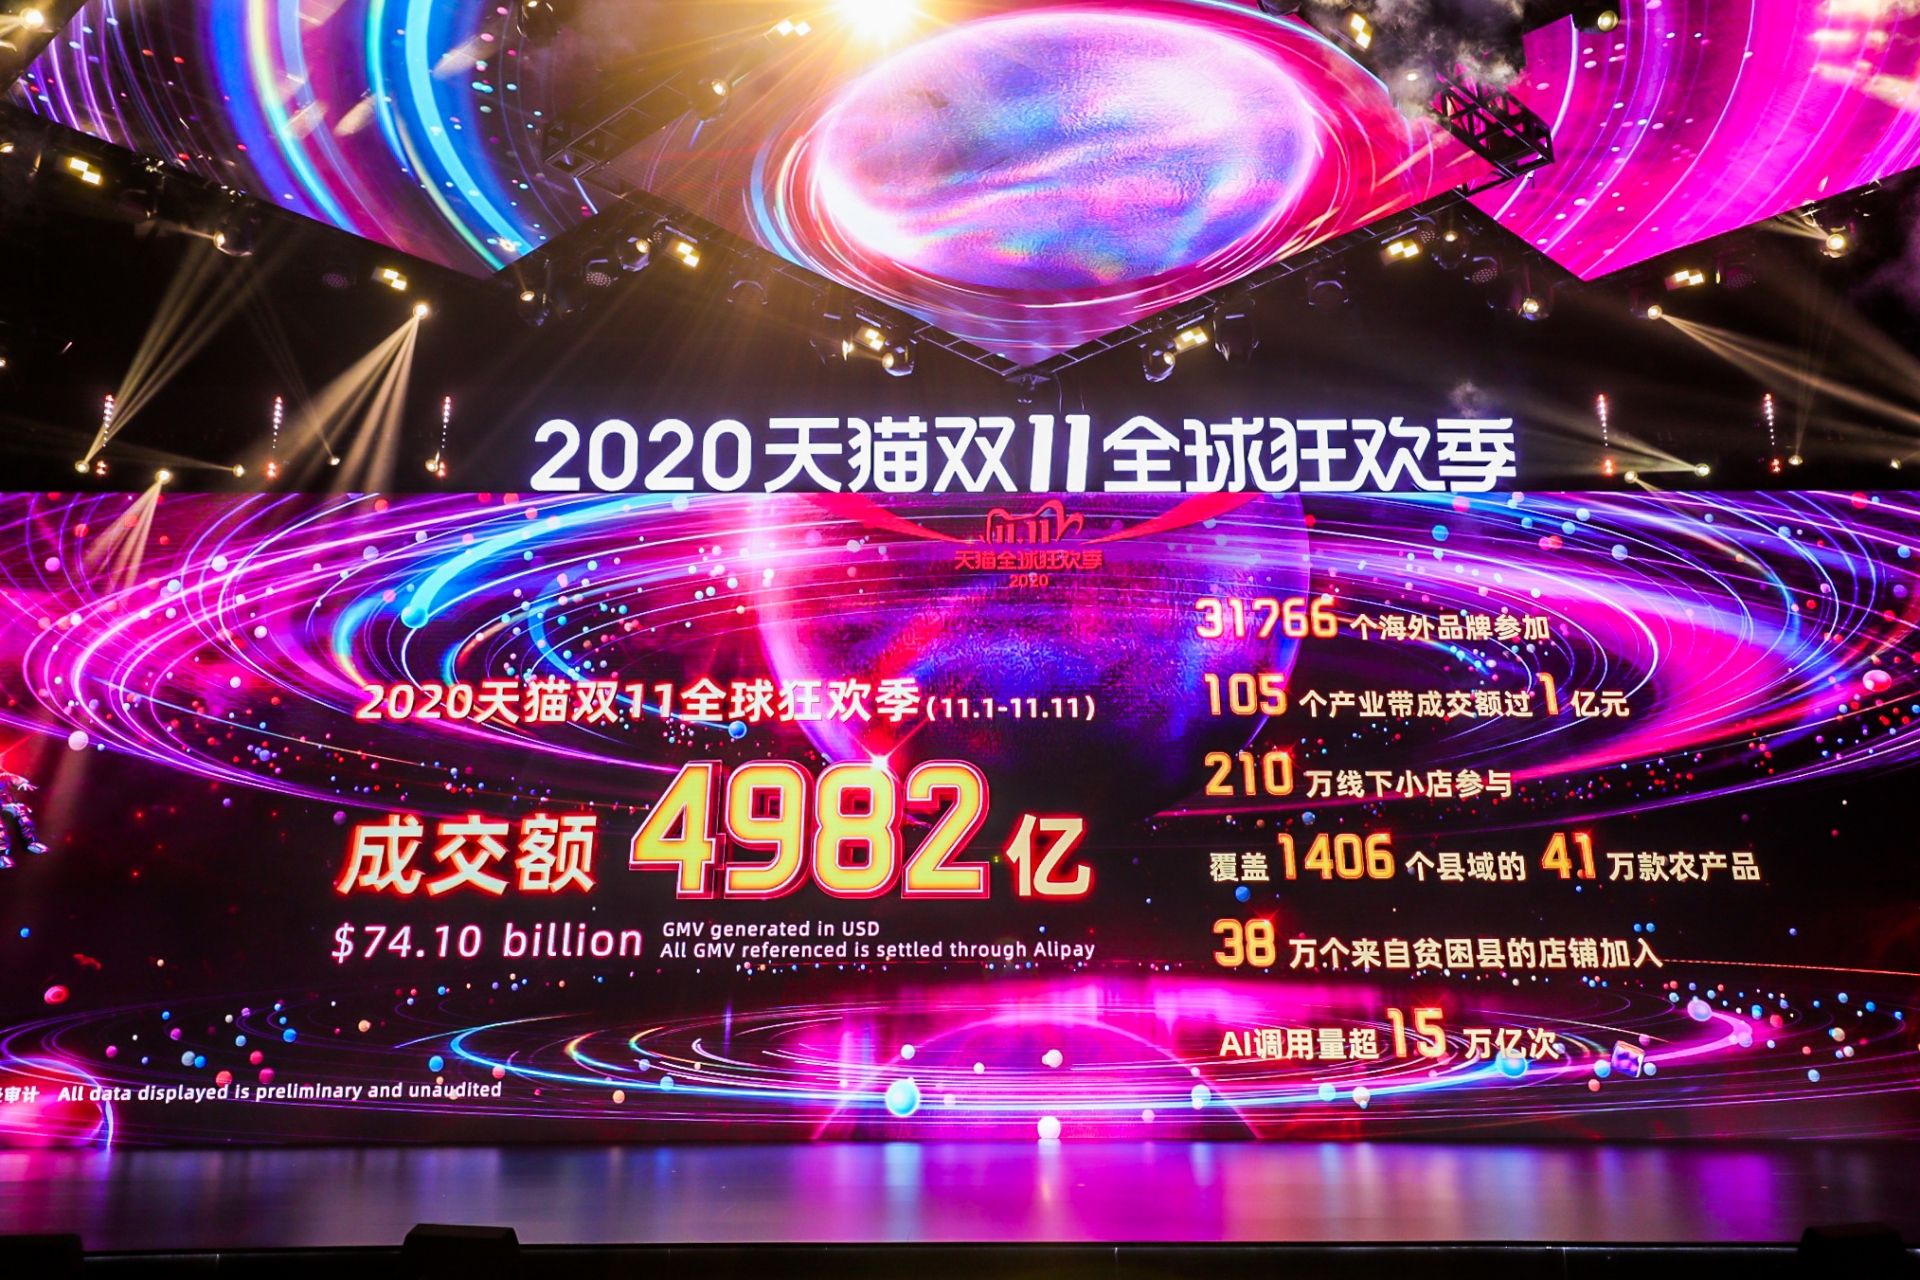 alibaba generates 741 billion in gmv during 2020 1111 global shopping festival